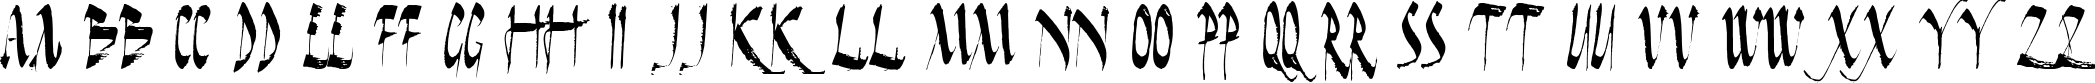 Пример написания английского алфавита шрифтом Dark Horse Condensed